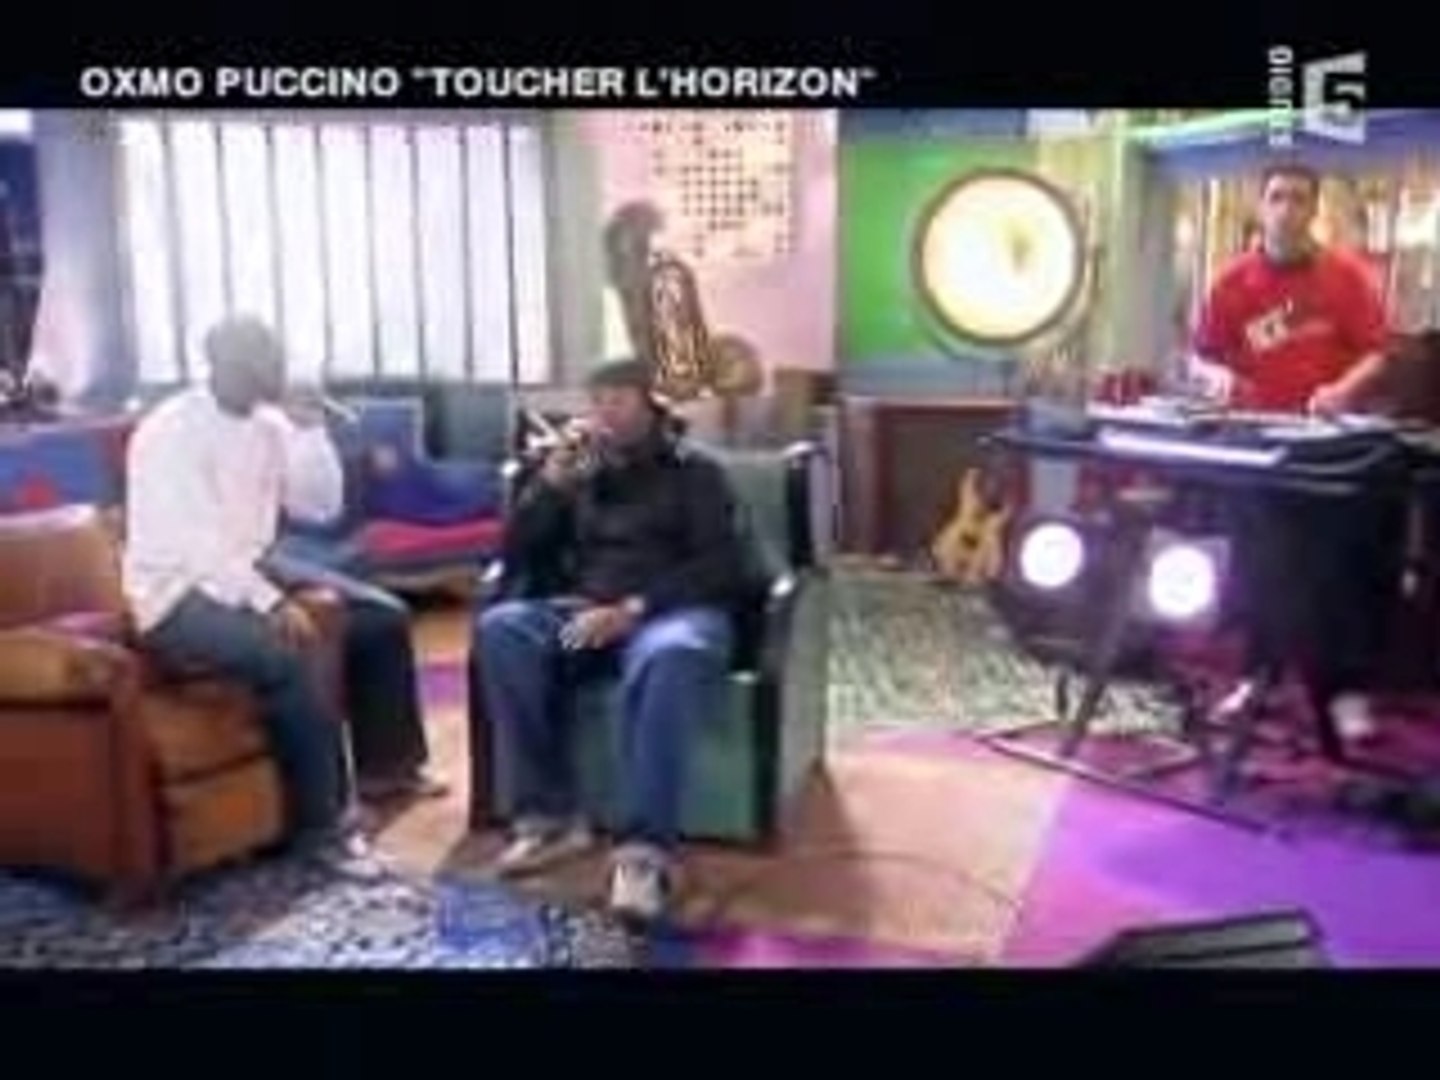 oxmo puccino-toucher l'horizon - Vidéo Dailymotion